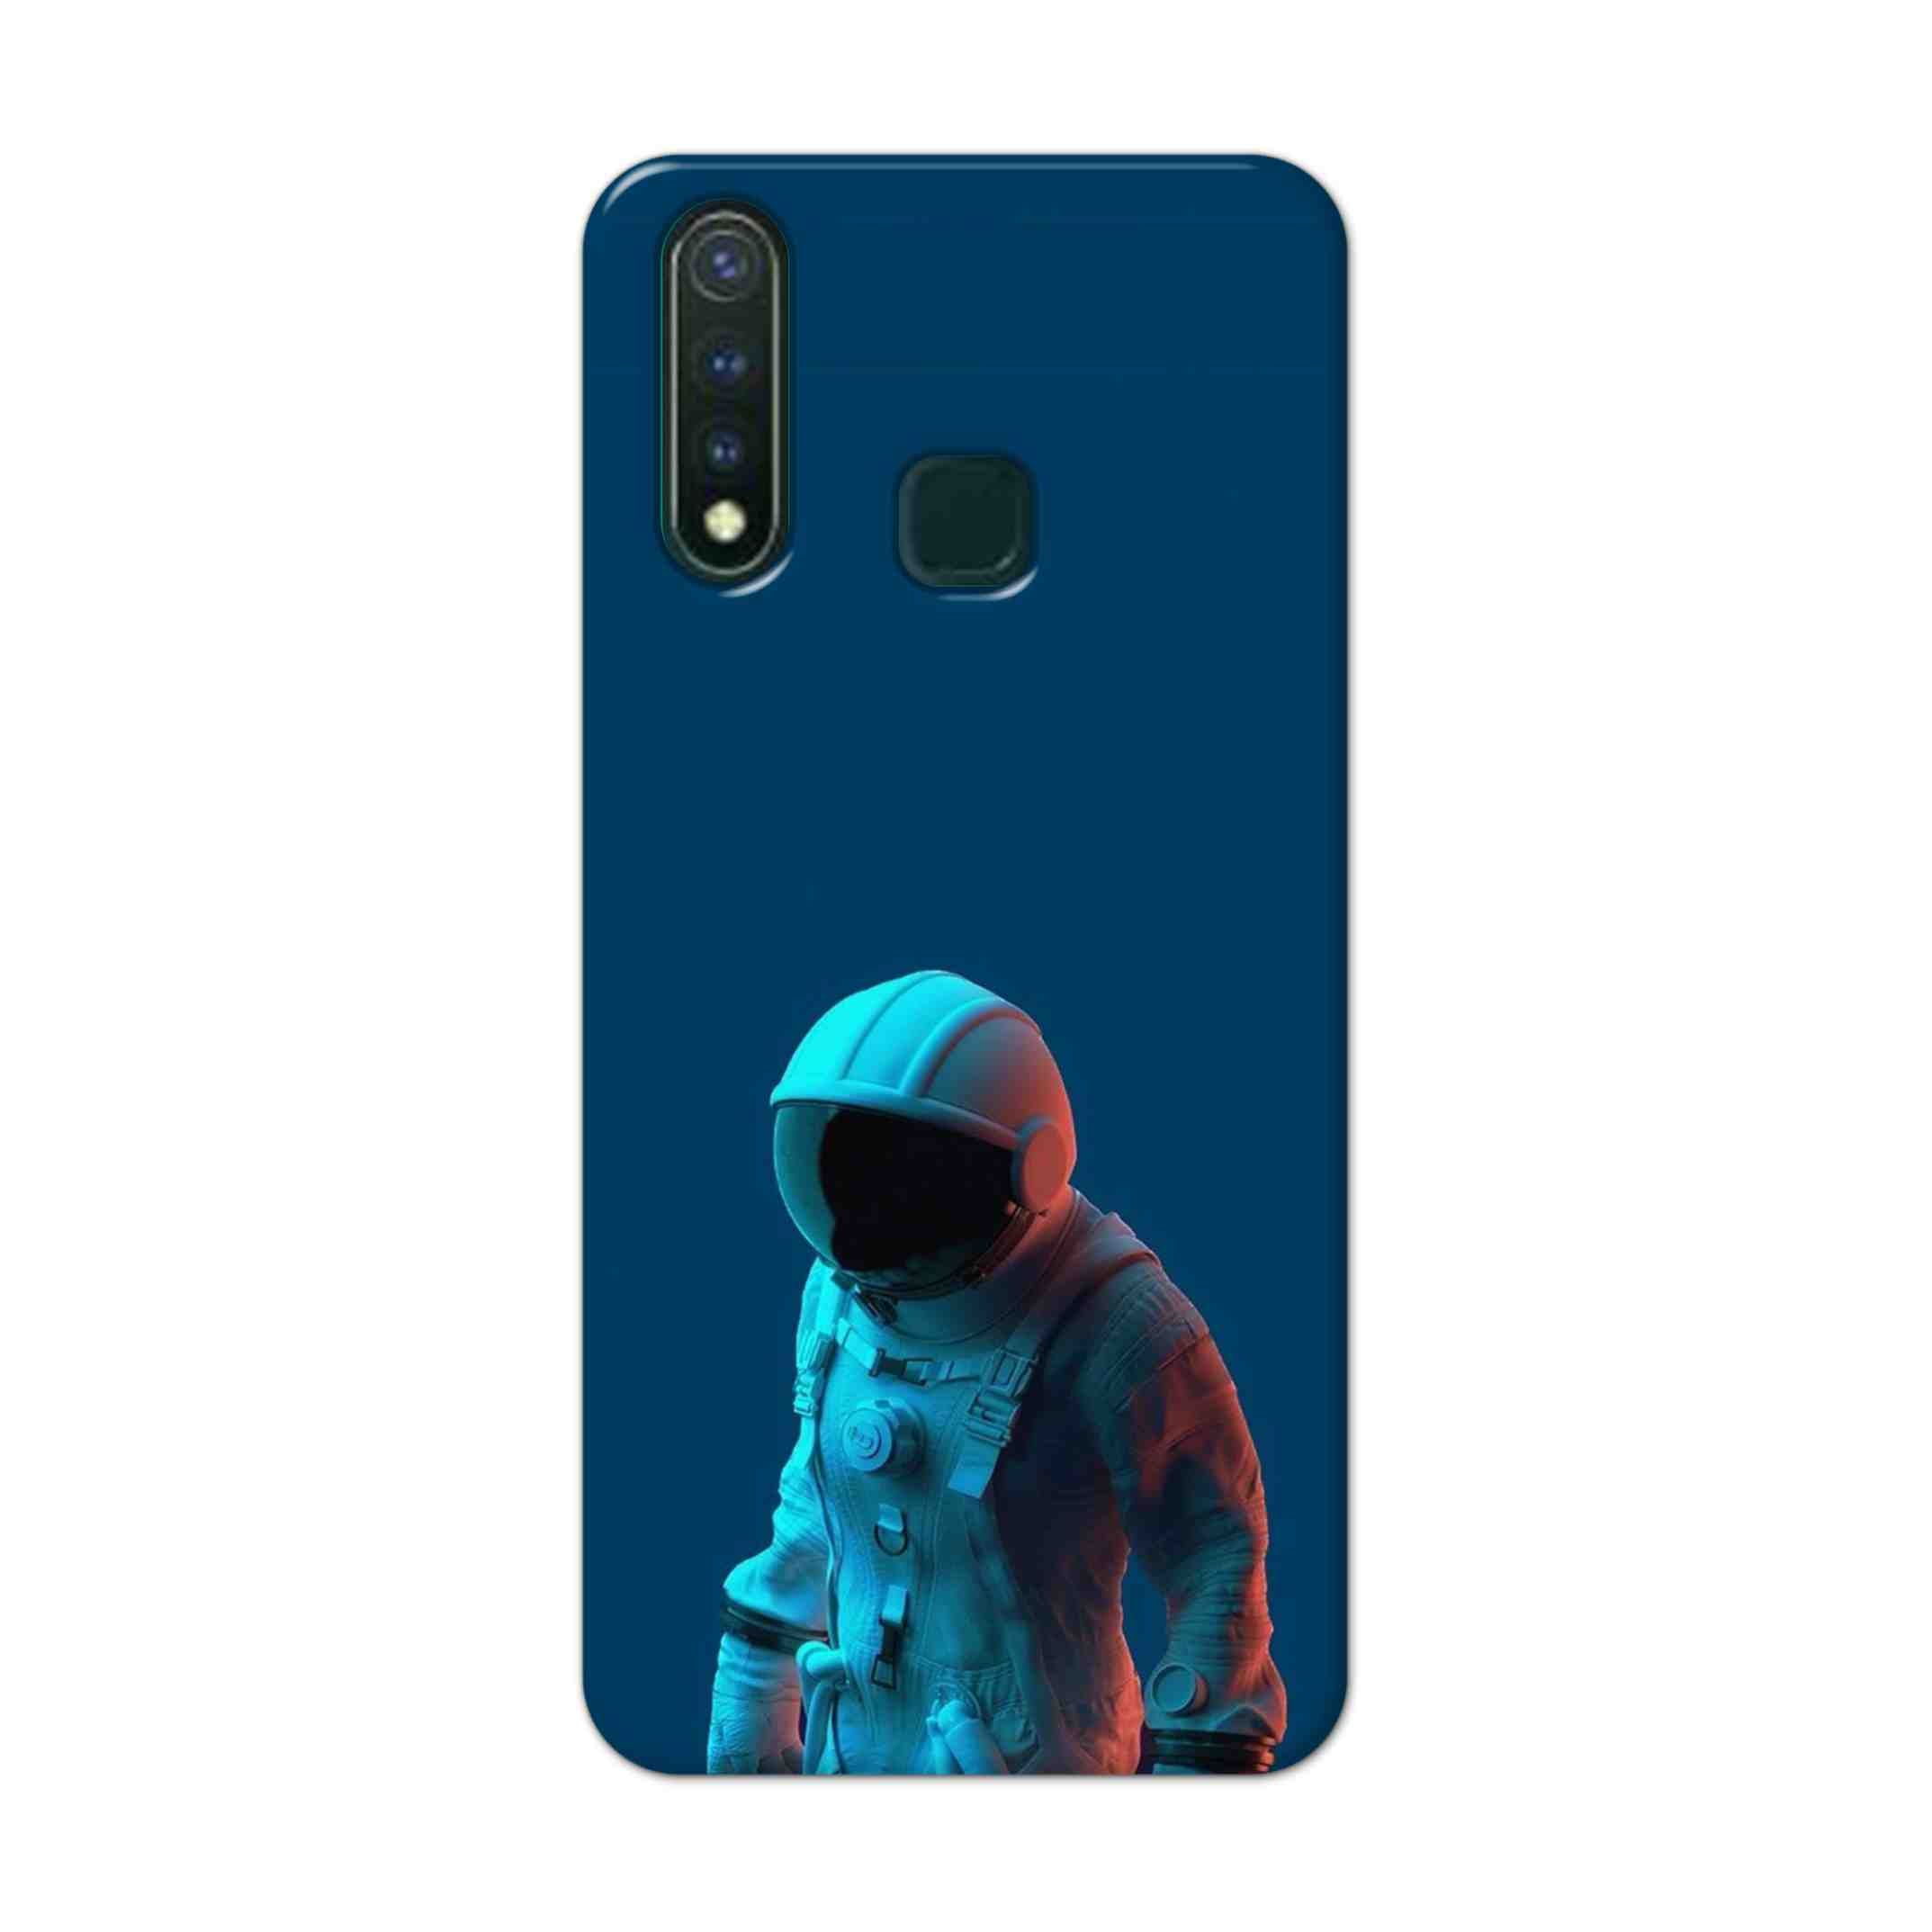 Buy Blue Astronaut Hard Back Mobile Phone Case Cover For Vivo U20 Online